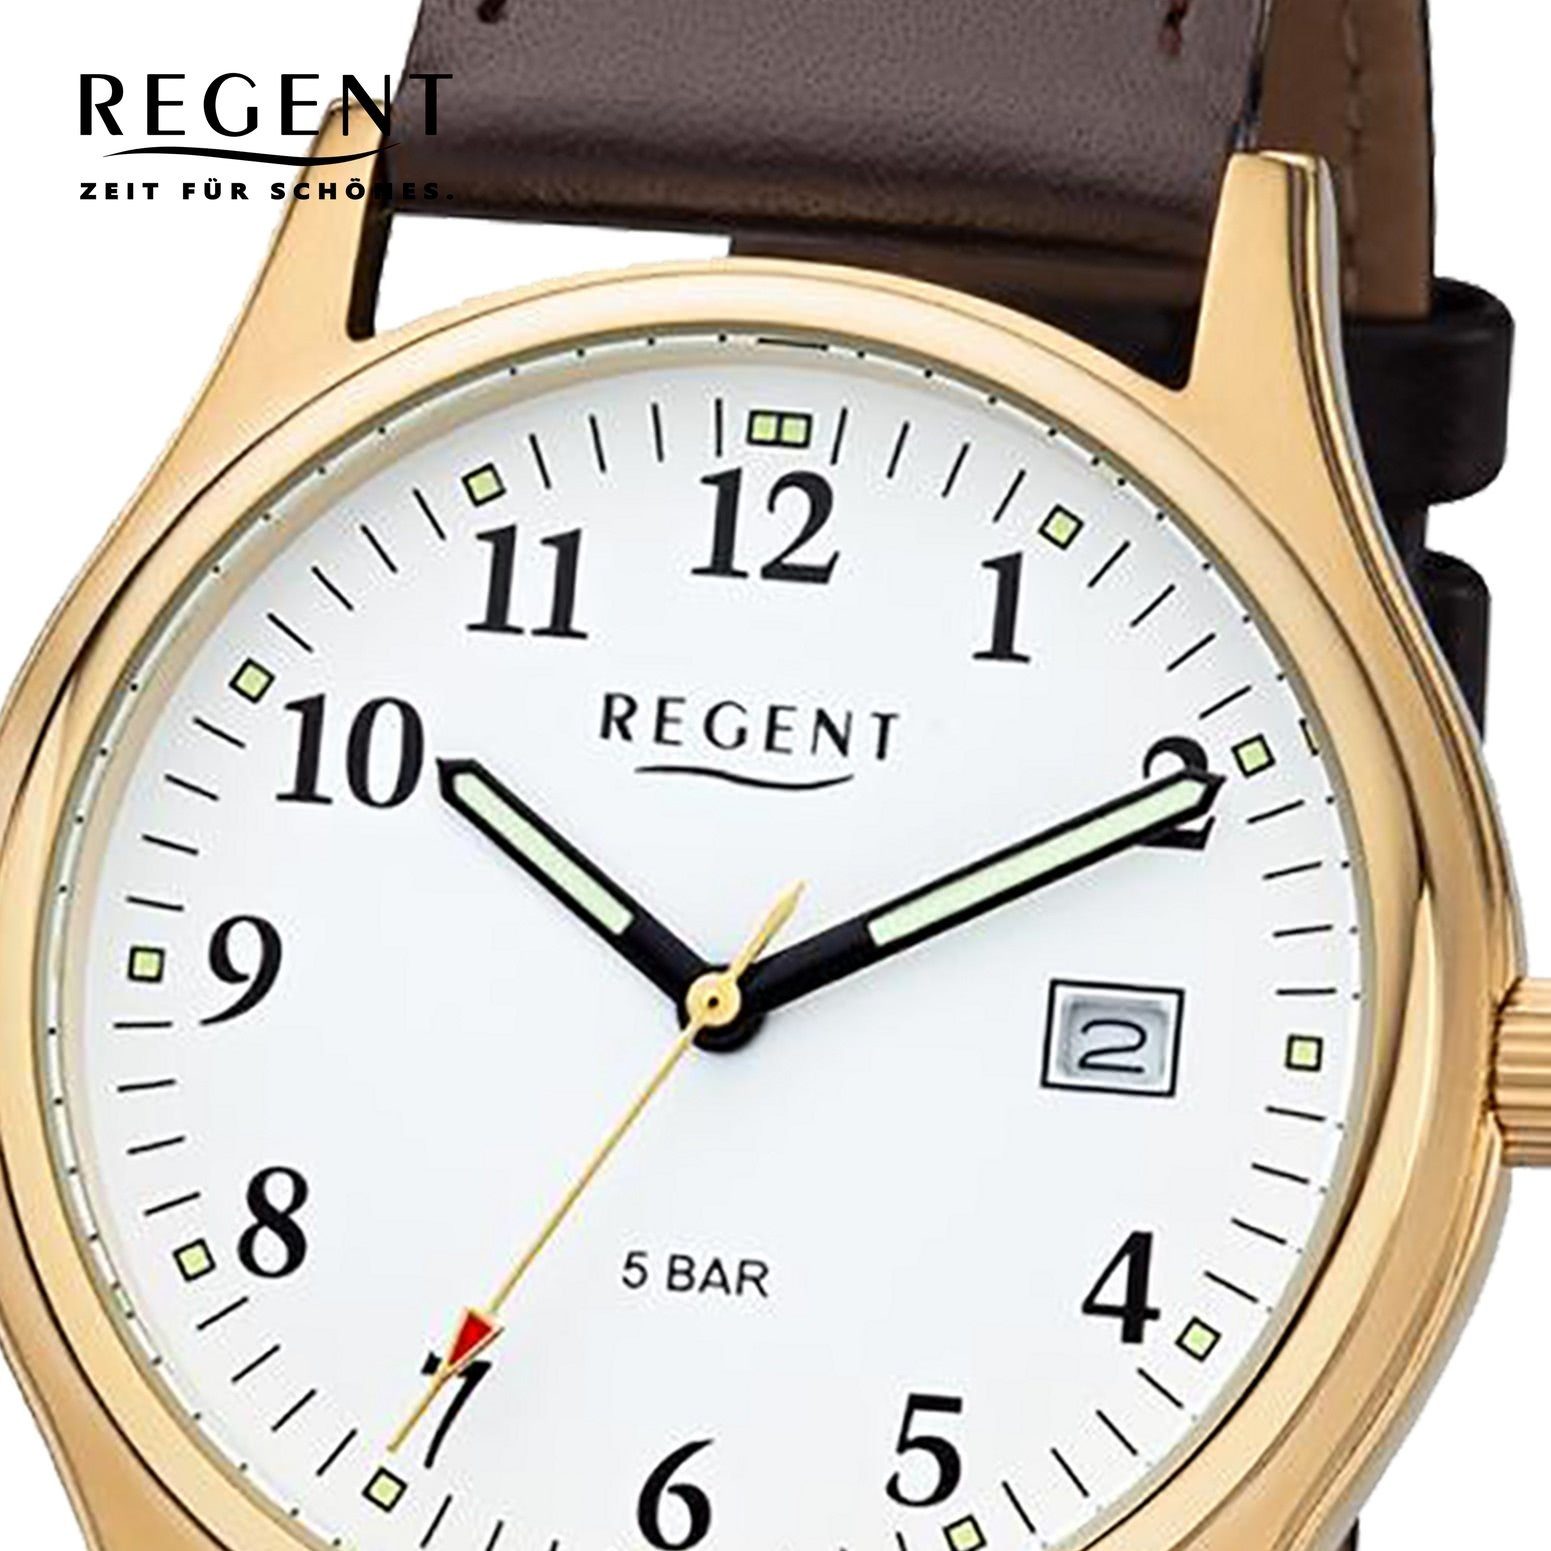 mittel Armbanduhr braun 37mm), Regent Herren (ca. Analog, rund, Herren-Armbanduhr Regent Quarzuhr Lederarmband rot